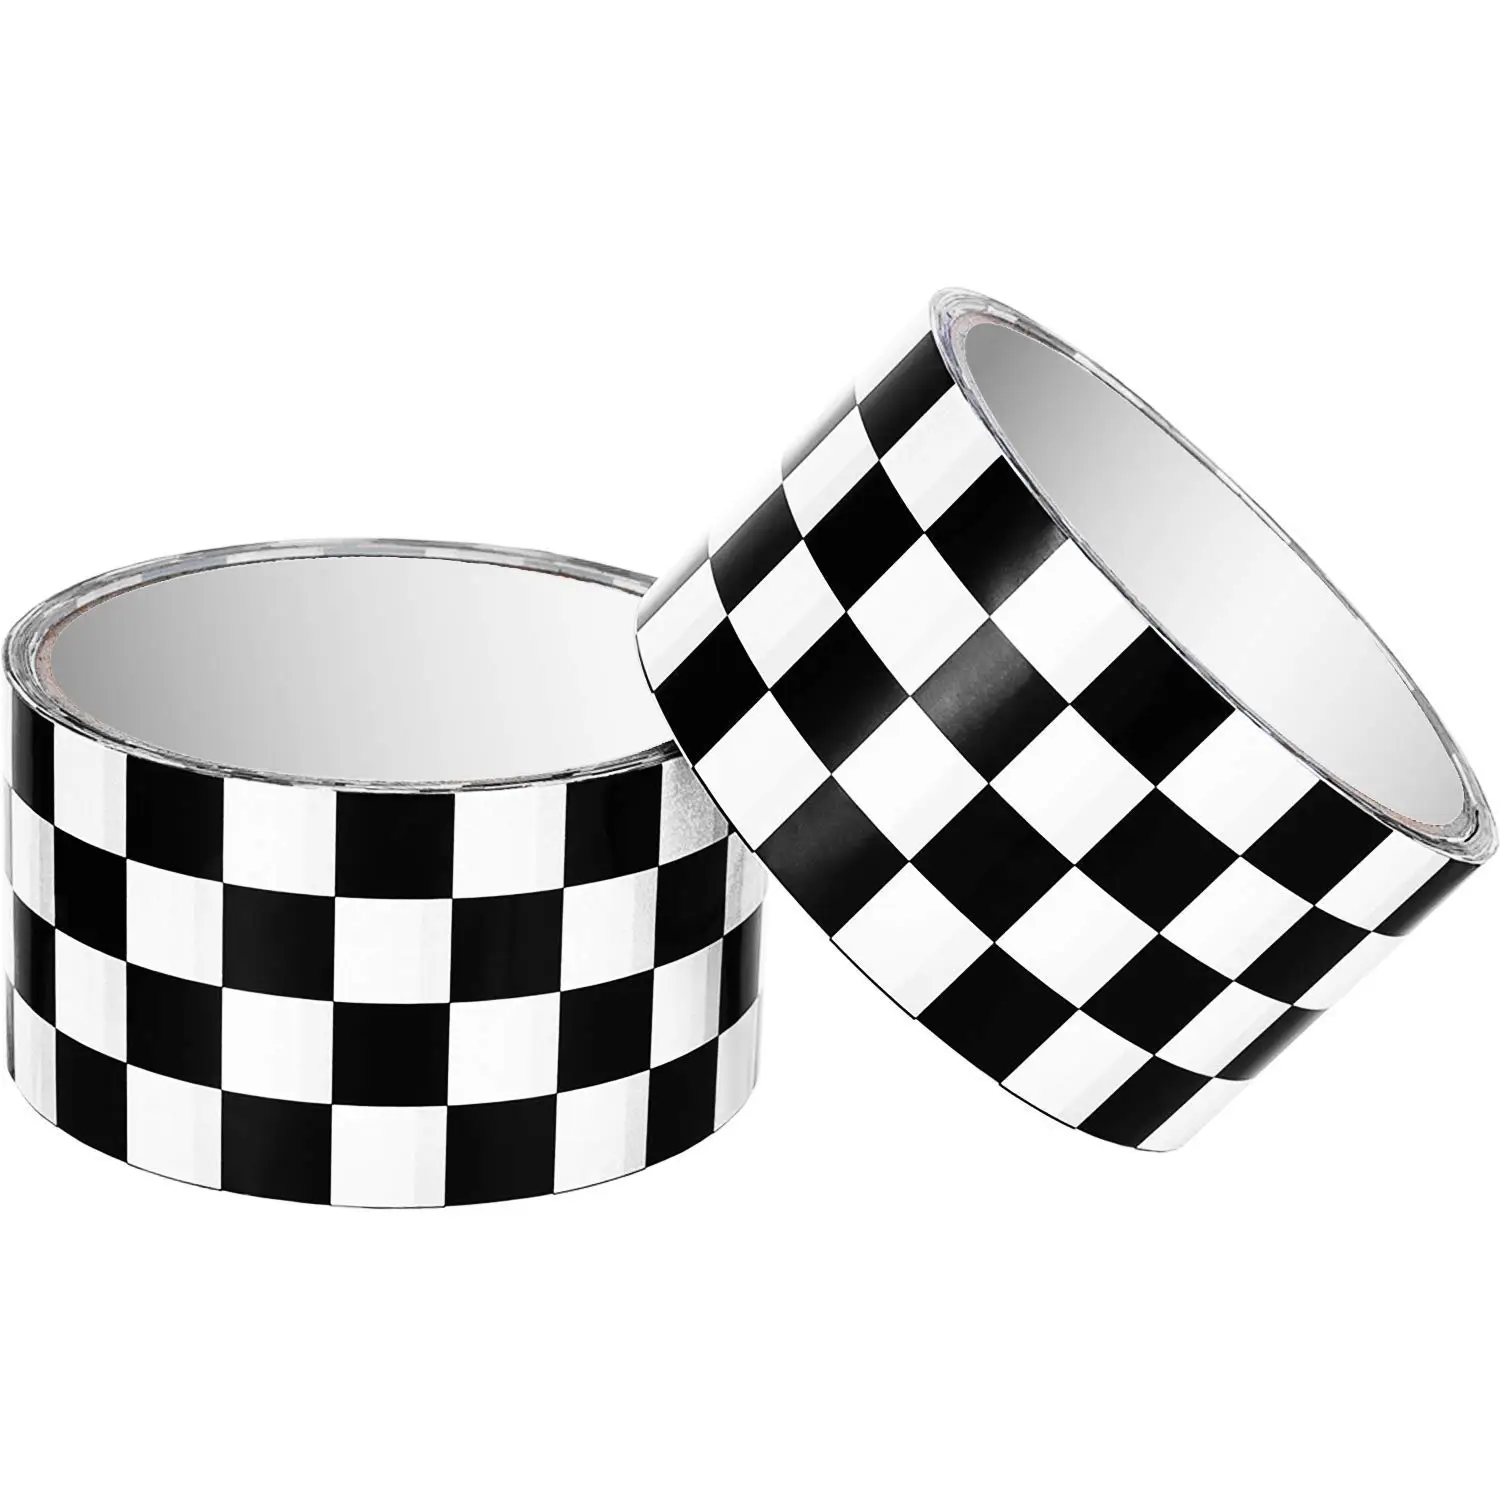 resinta-4-rolls-65-yards-checkered-tape-black-and-white-checkered-flag-tape-tape